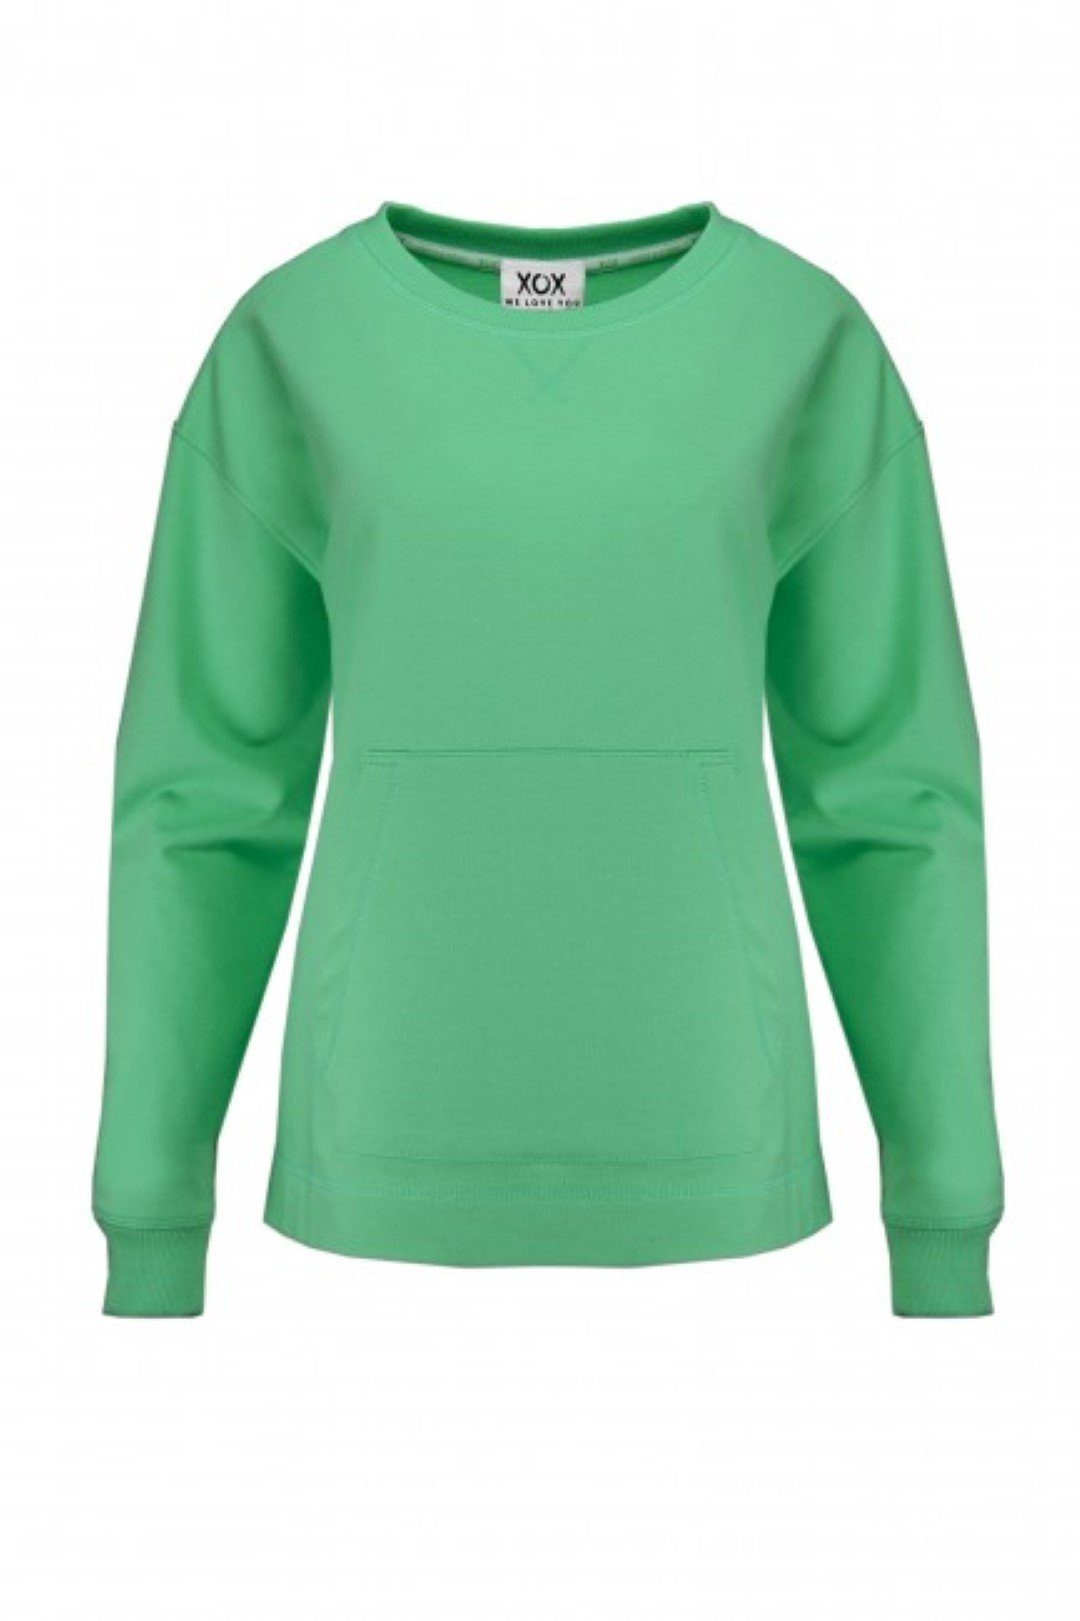 XOX Hoodie XOX Sweatshirt Rundhals, Longsleeve, jade-grün - Fair Trade - Fair Trade, Oberteil, Shirt, Damenmode